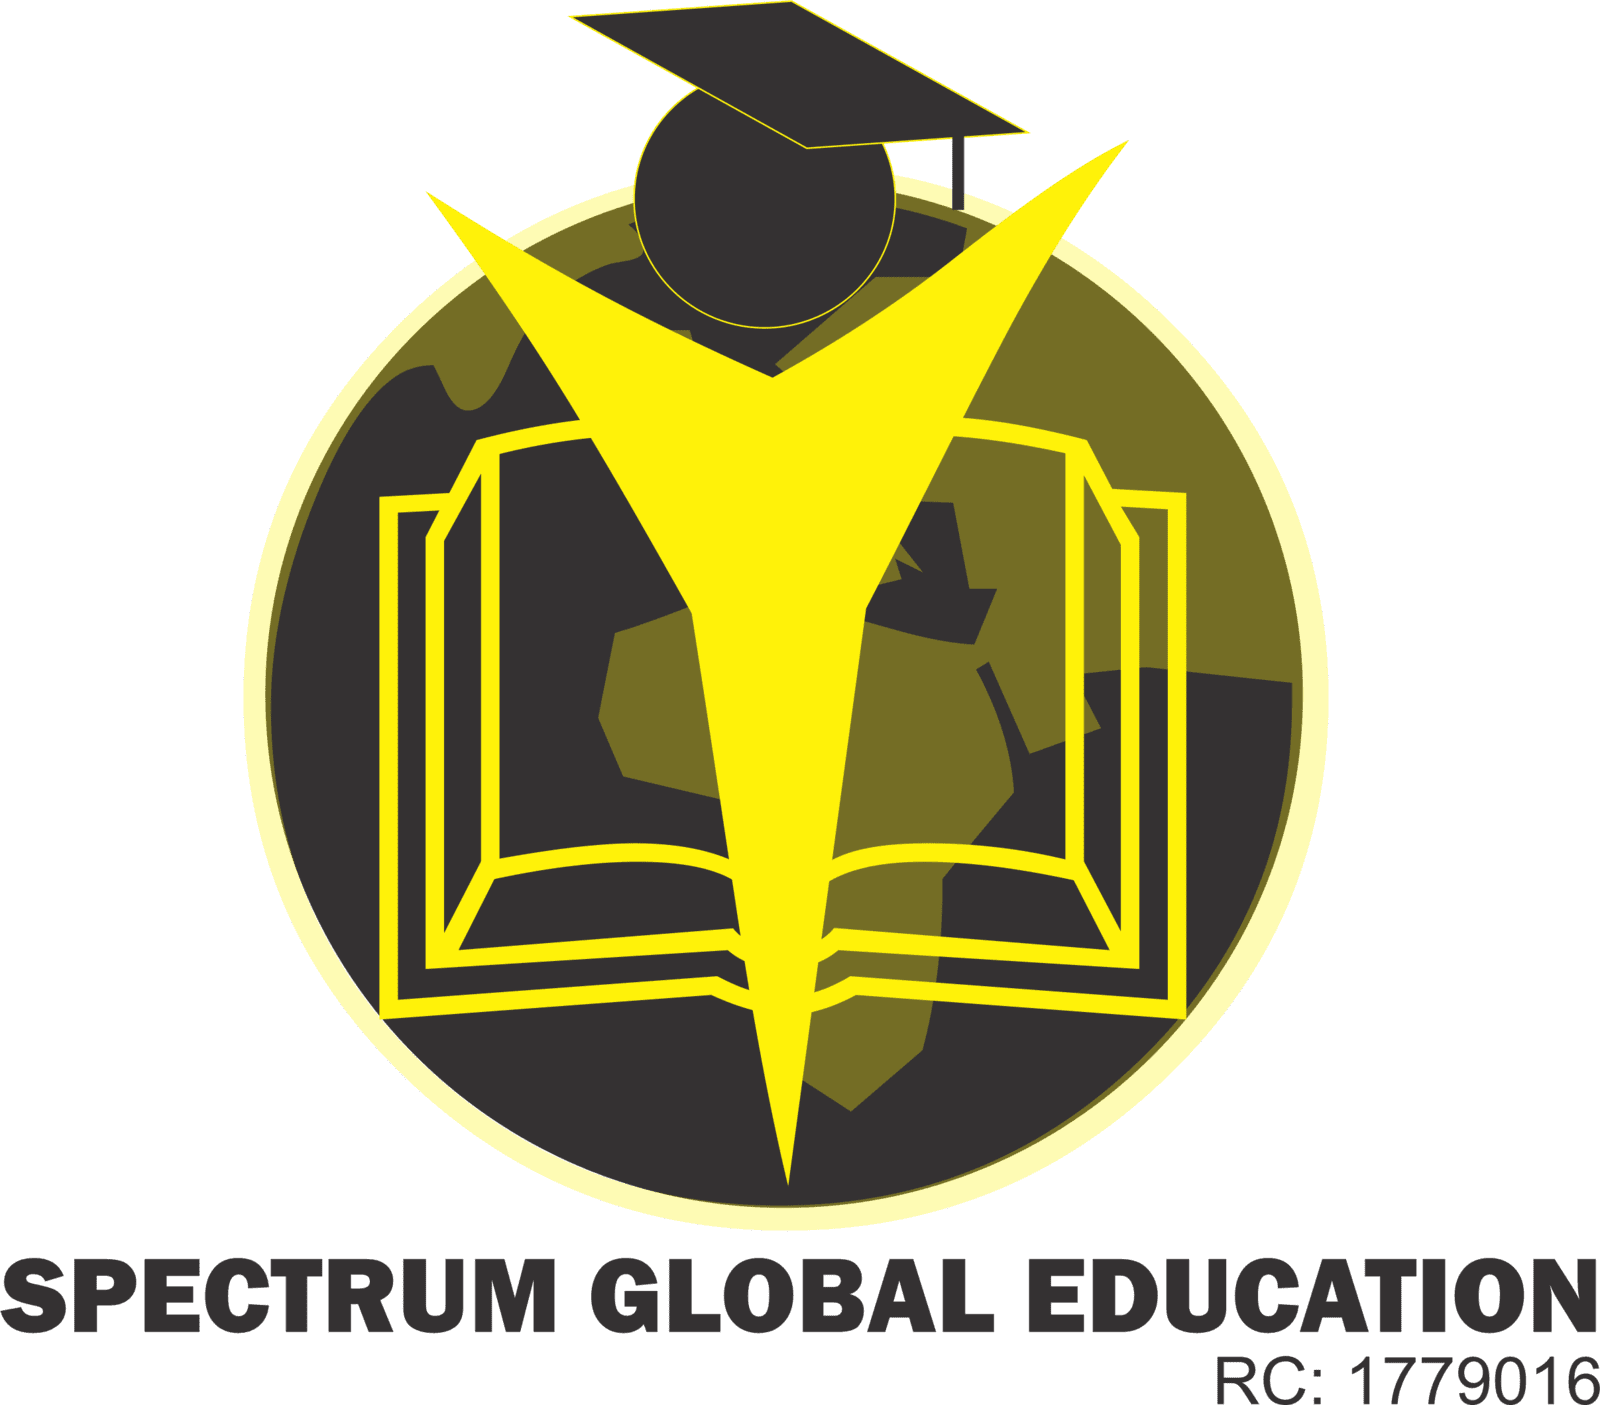 Spectrum Global Education LTD